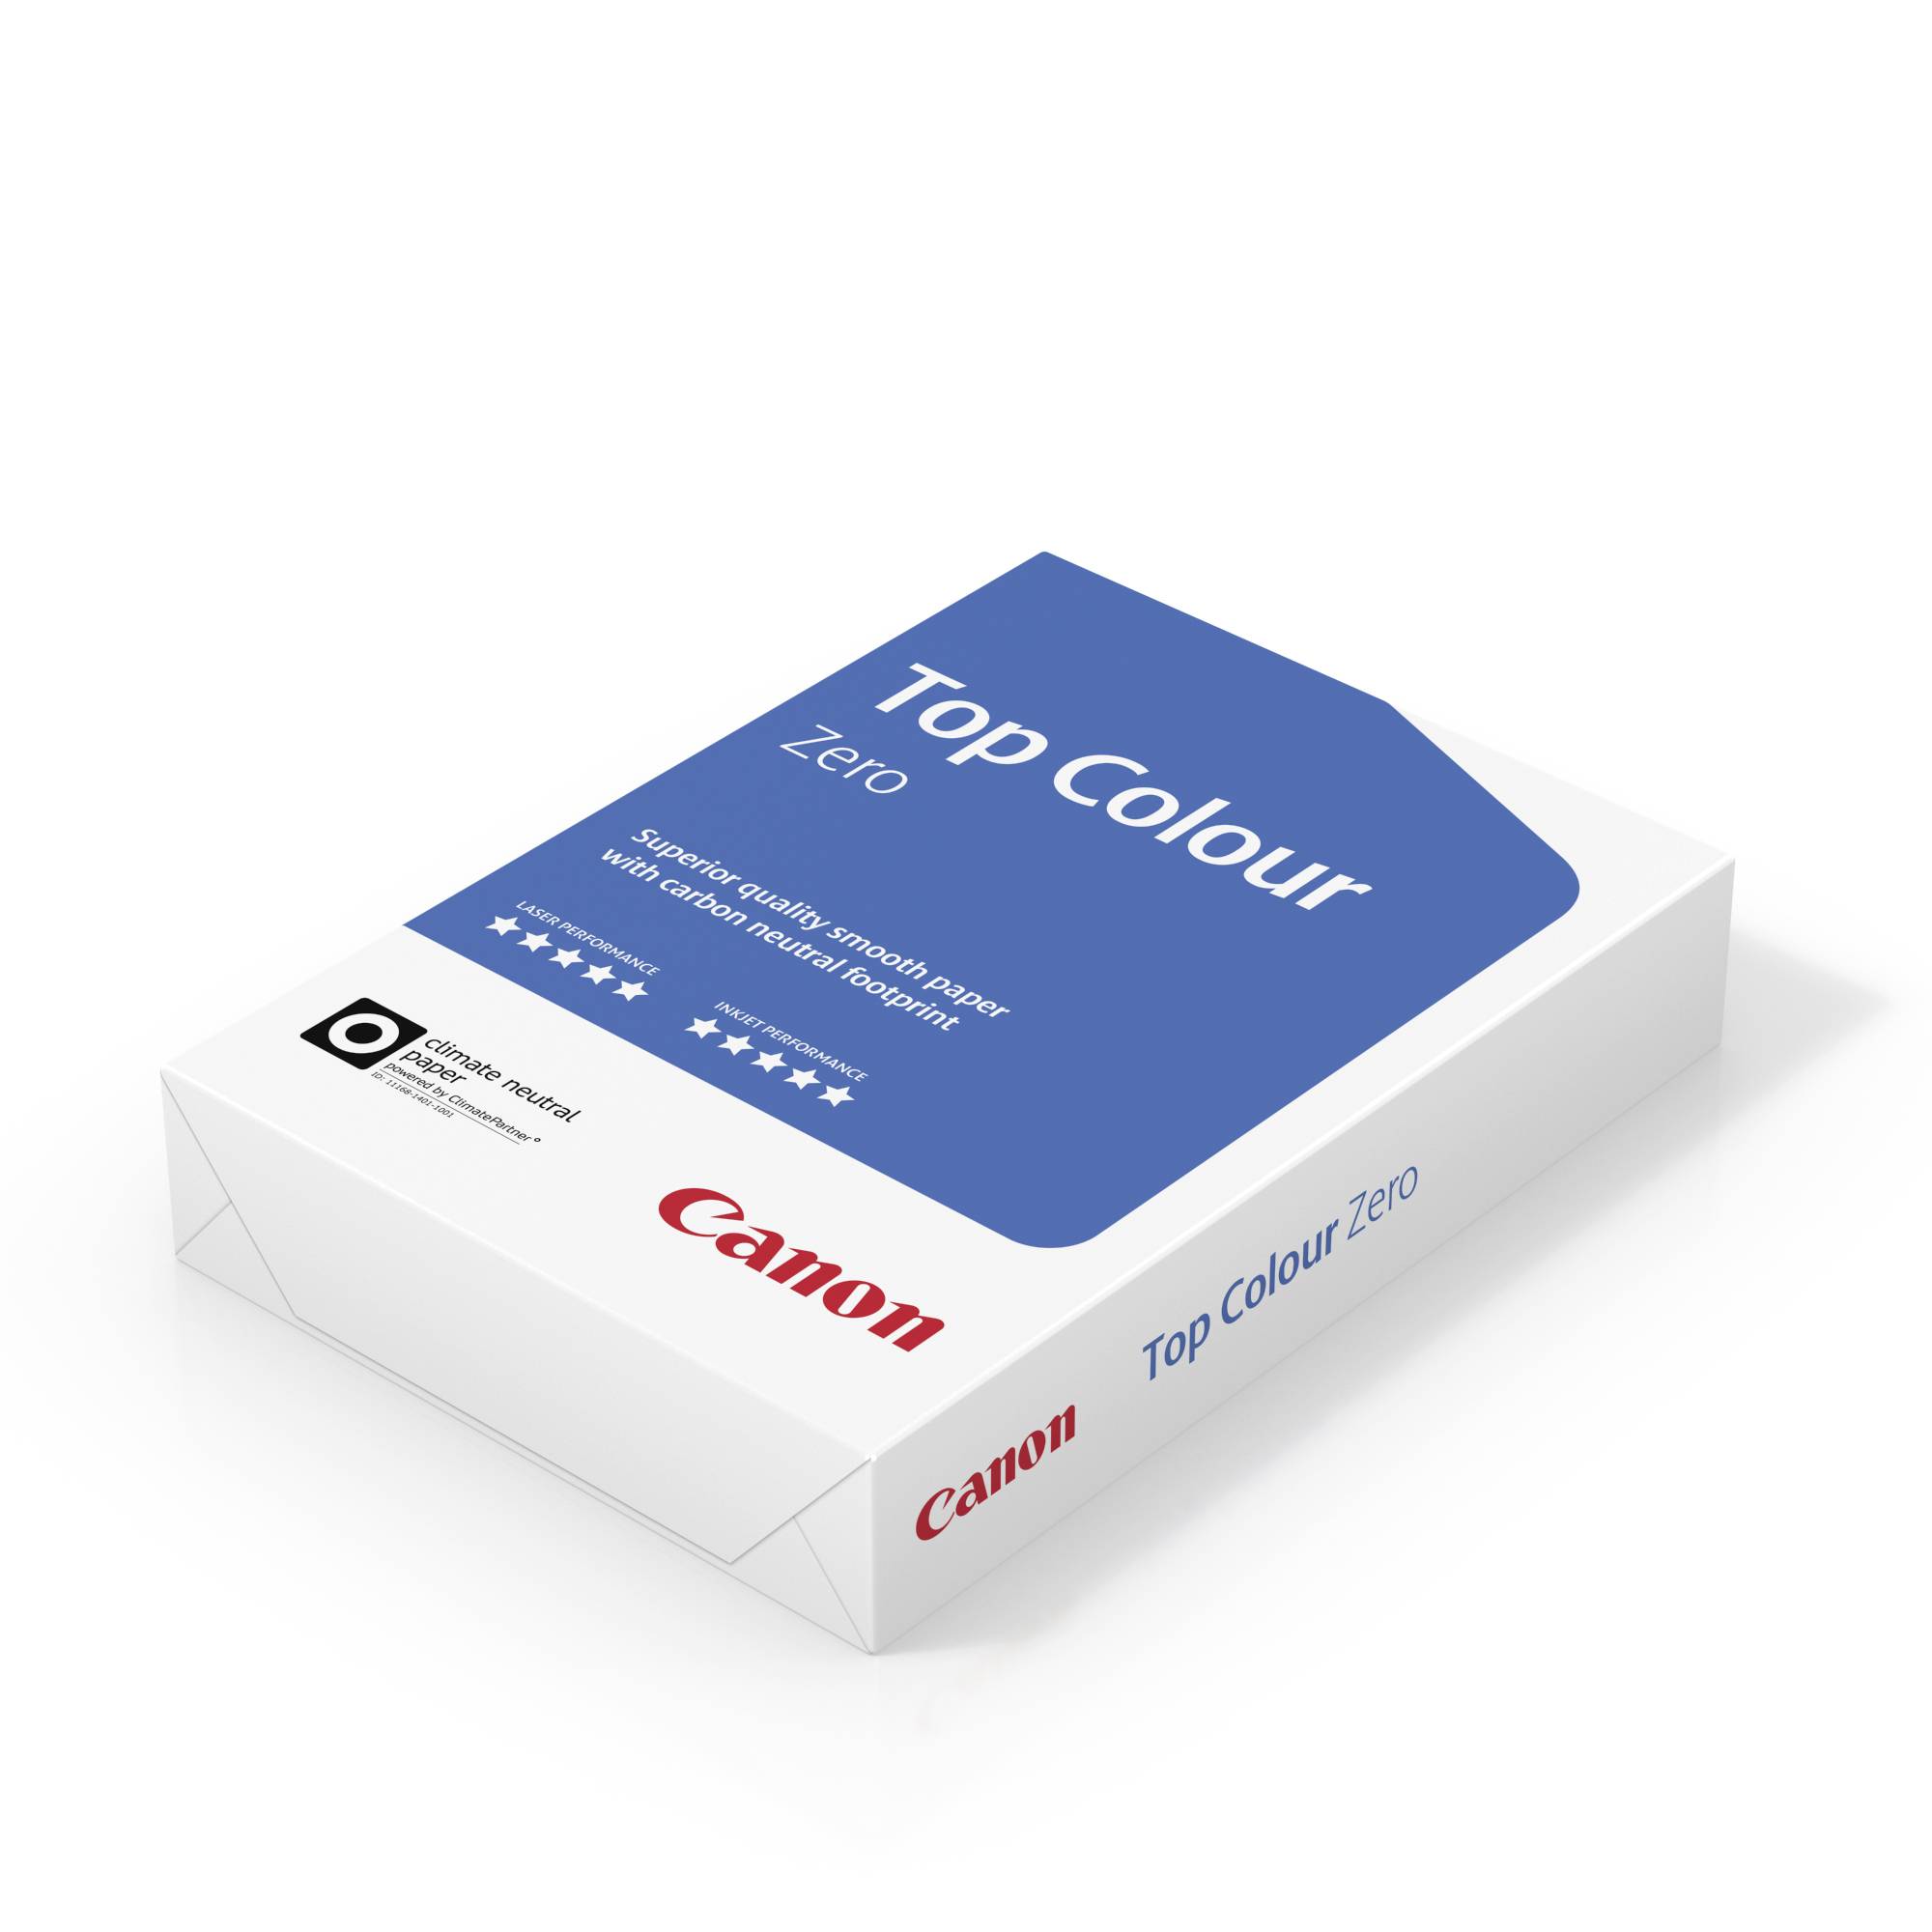 CANON Océ Top Color Paper FSC SAT053 - almin